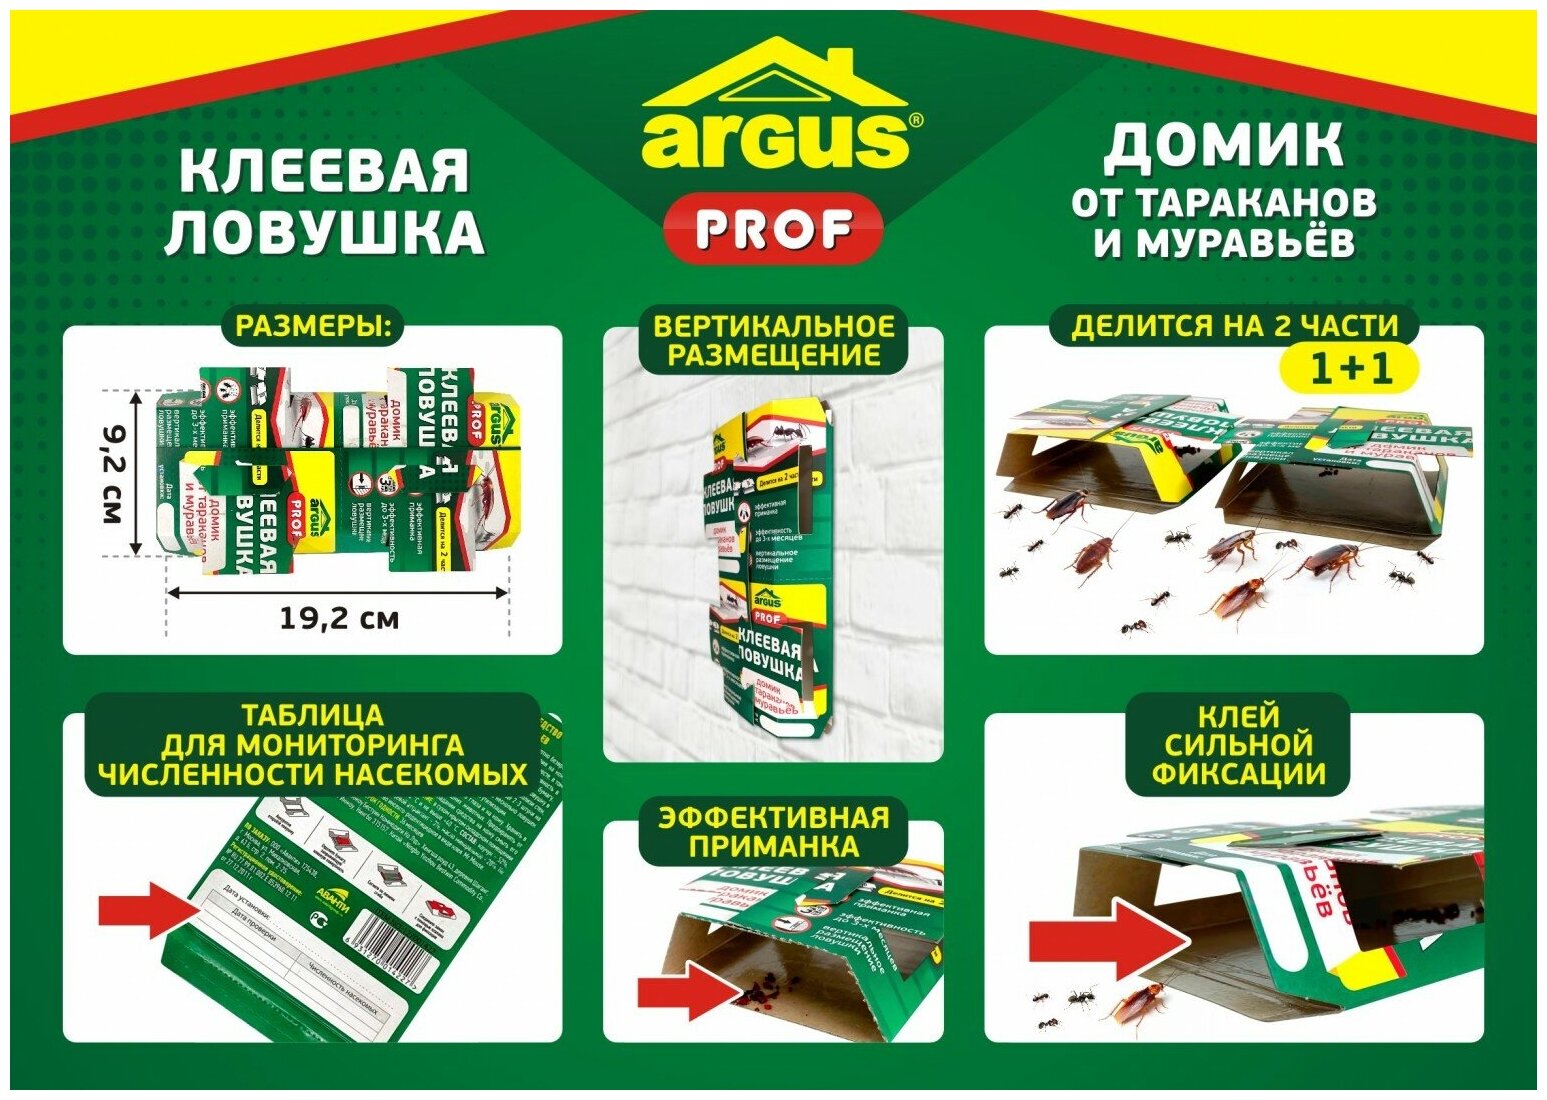 ARGUS PFOF клеевая ловушка для тараканов и муравьев (5 шт.)